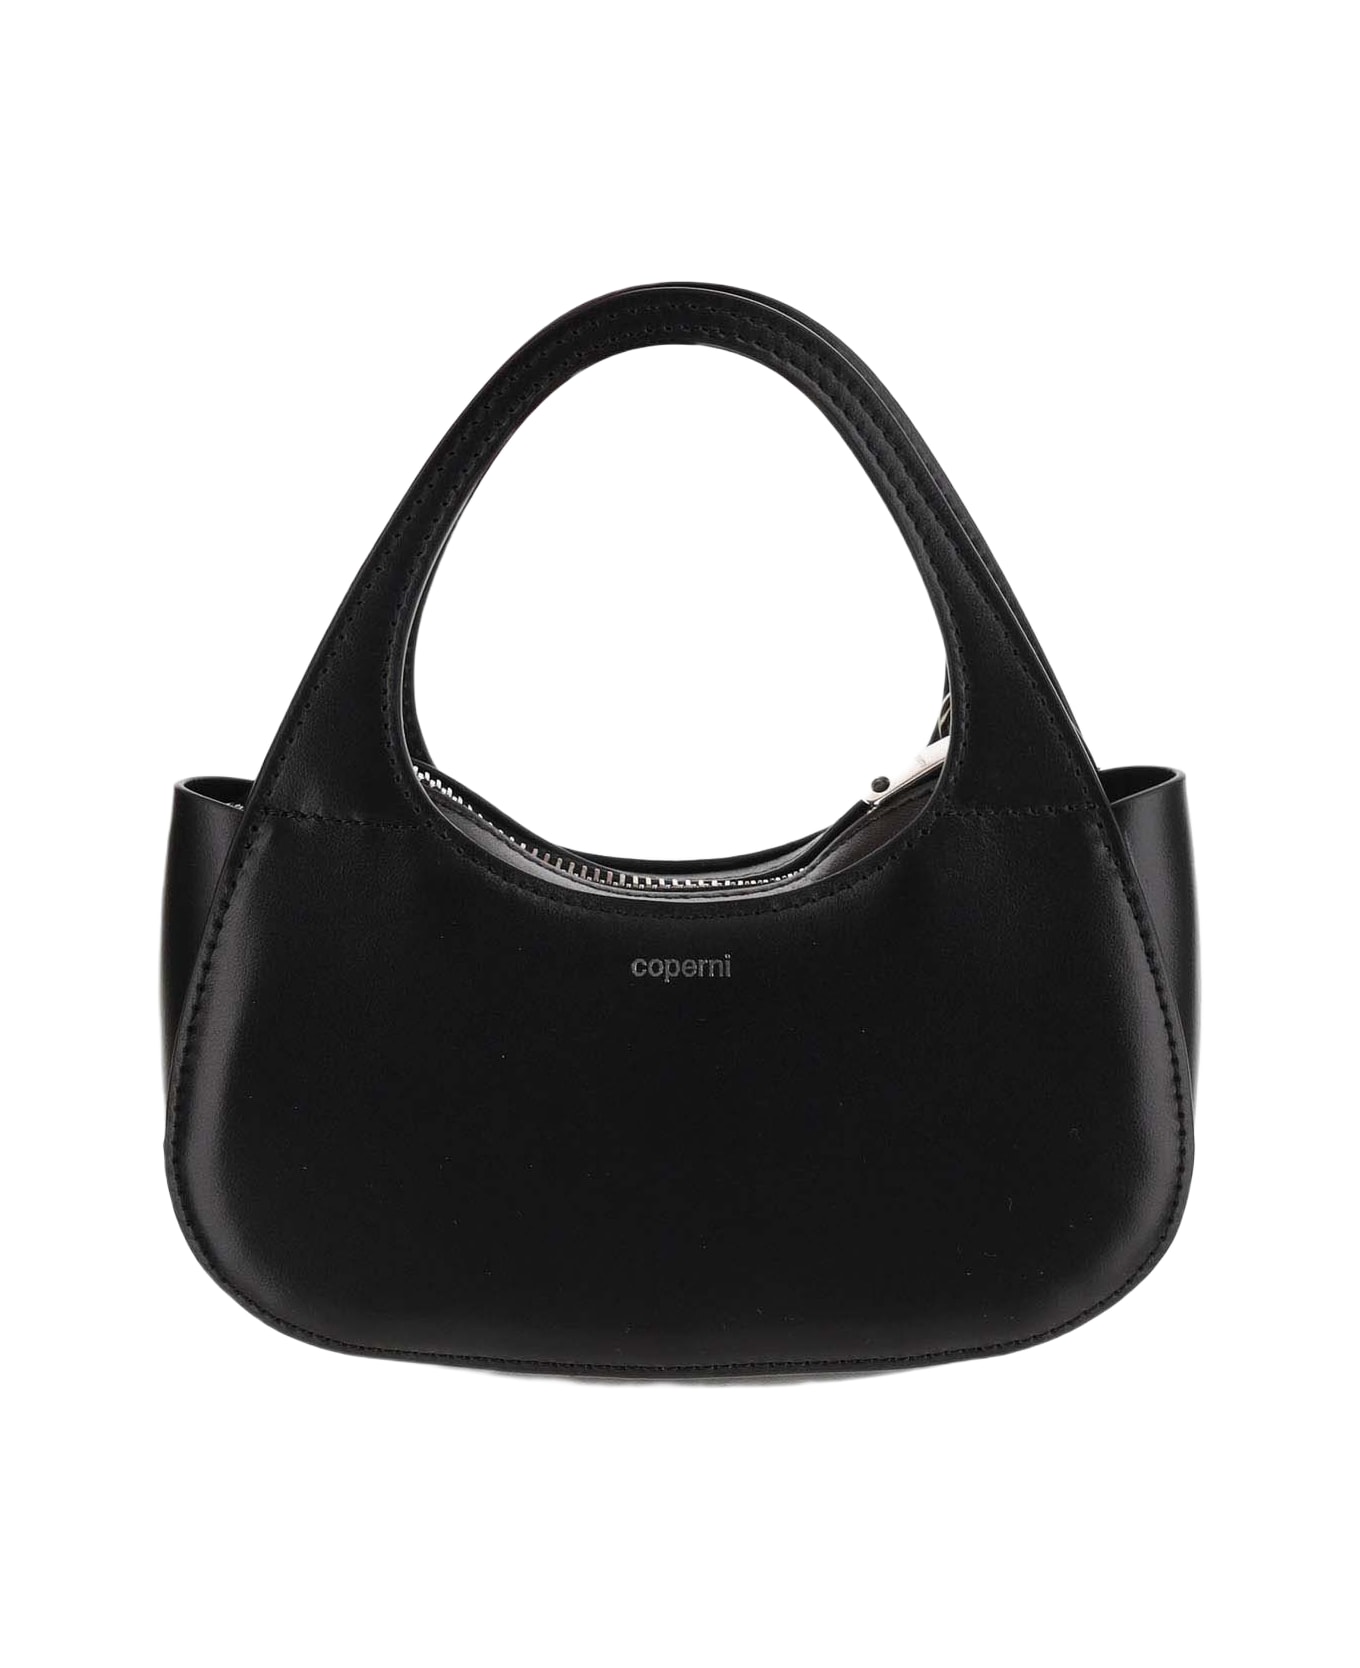 Coperni Micro Baguette Swipe Leather Bag Shoulder Bag - Black